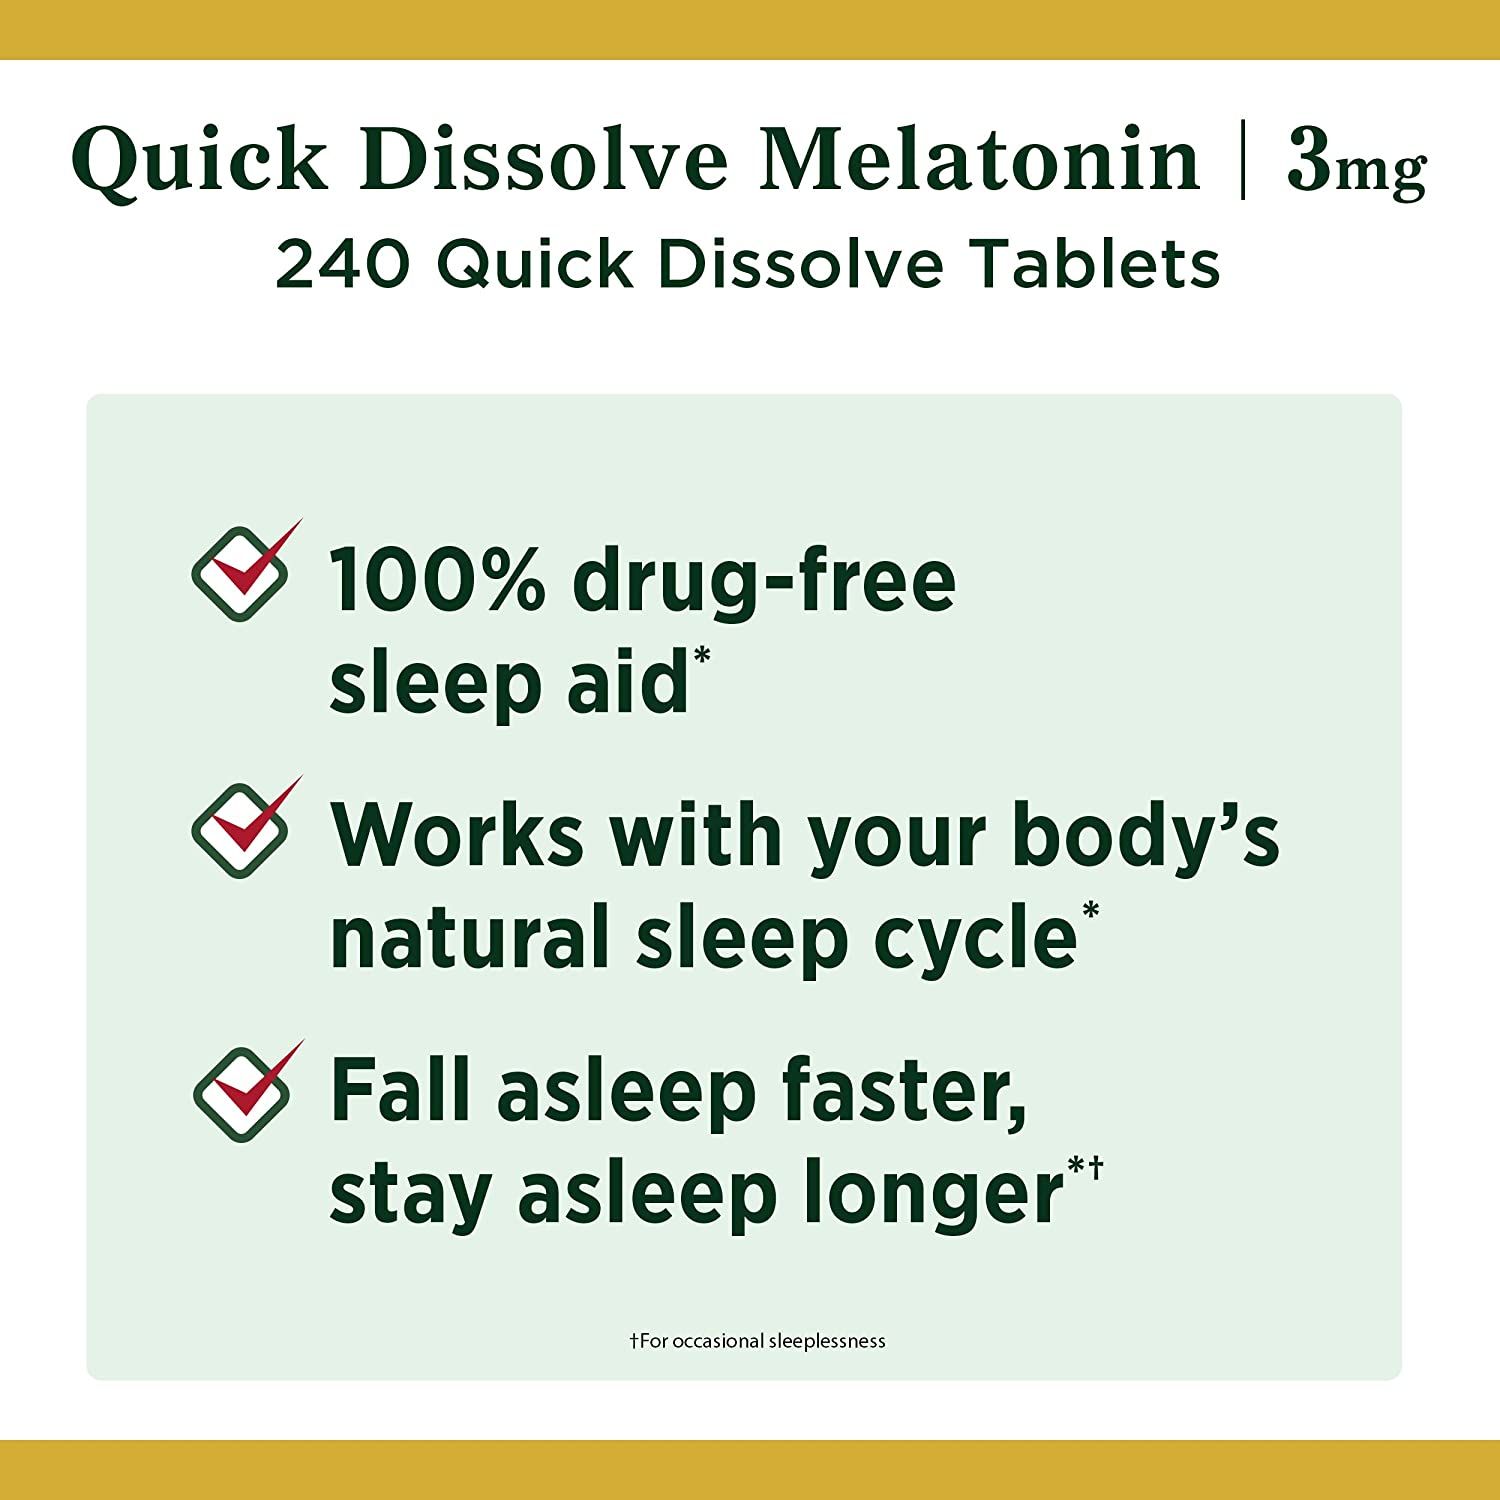 Nature's Bounty Melatonin Quick Dissolve Tablets, 3 mg - 240 ct